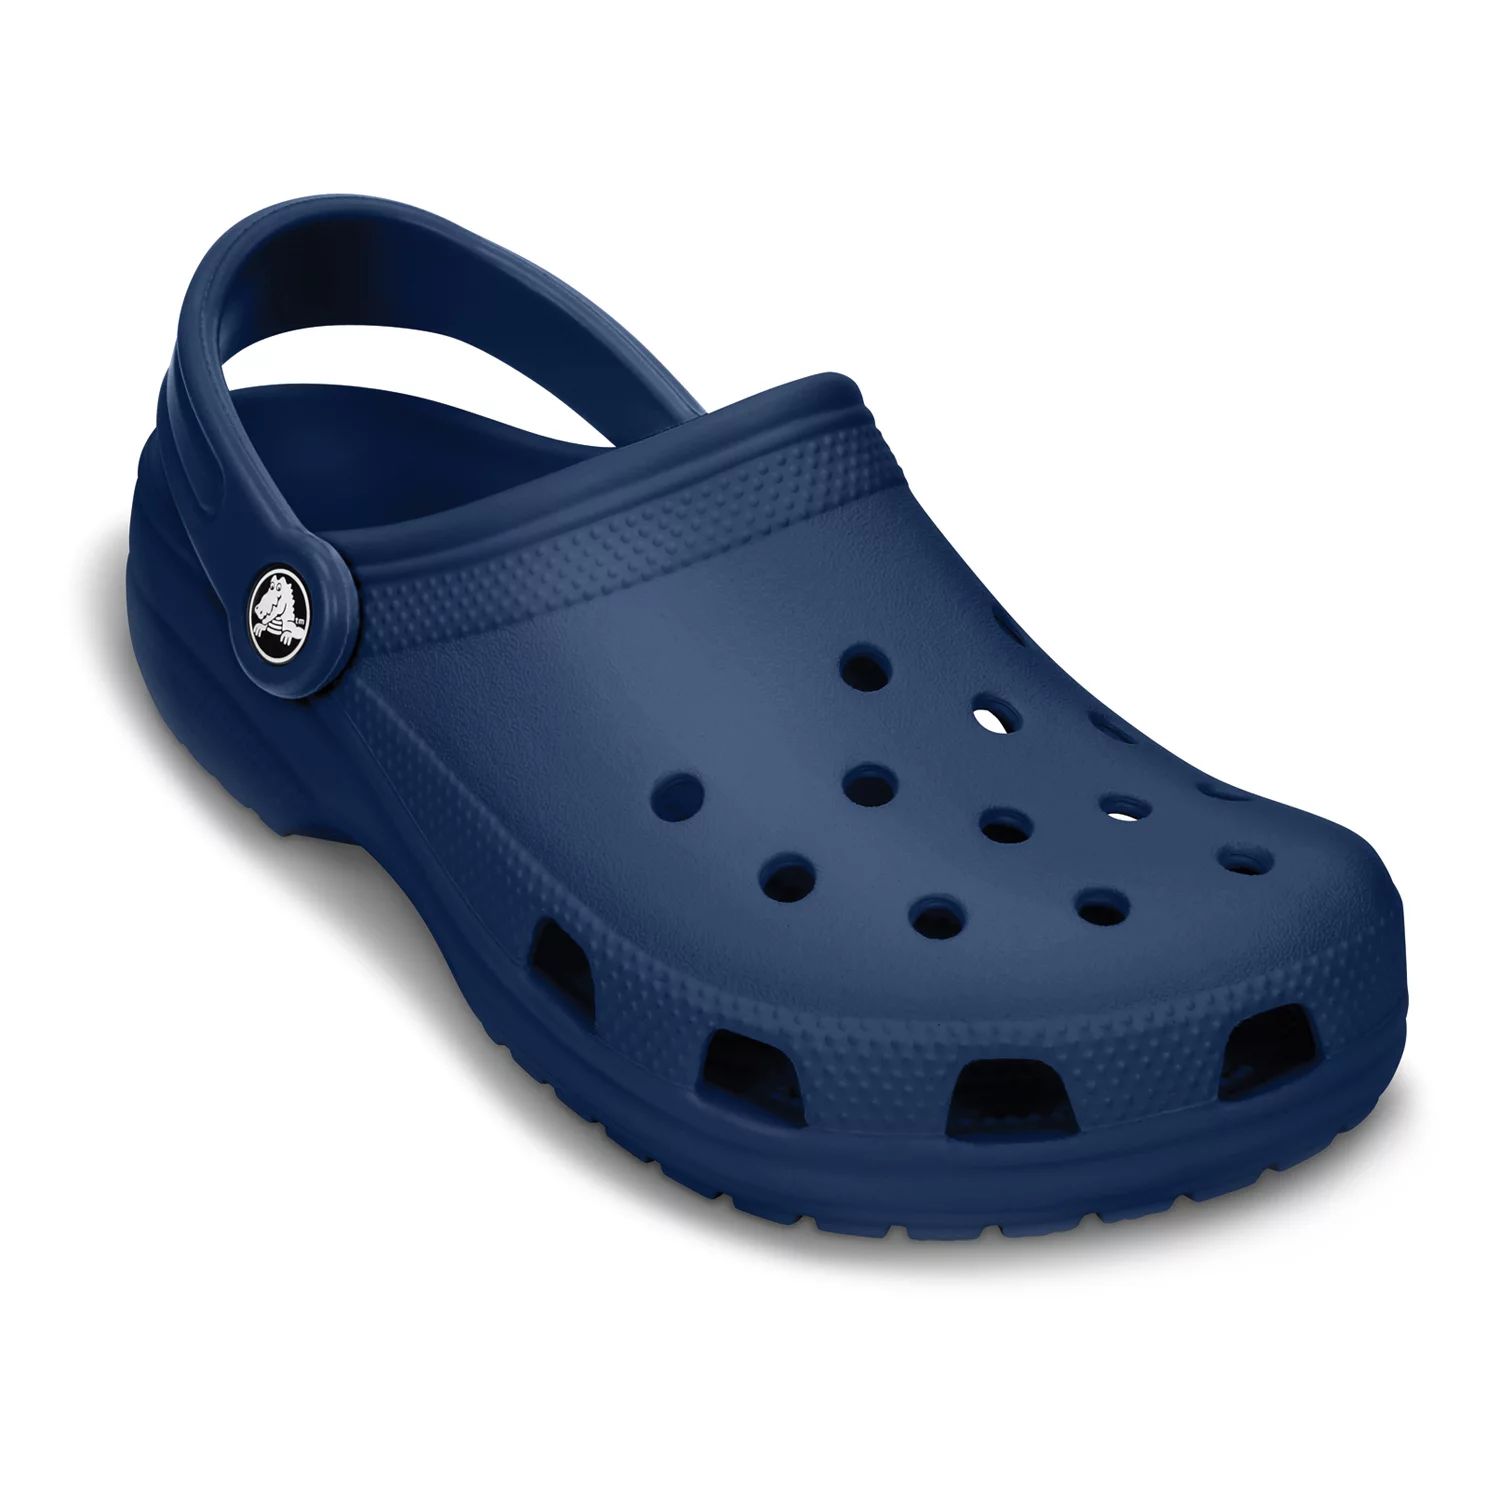 Сабо мужские медицинские. Crocs Classic Clog. Крокс сабо синие. Кроксы женские Crocs Classic. Сабо крокс Классик голубые.